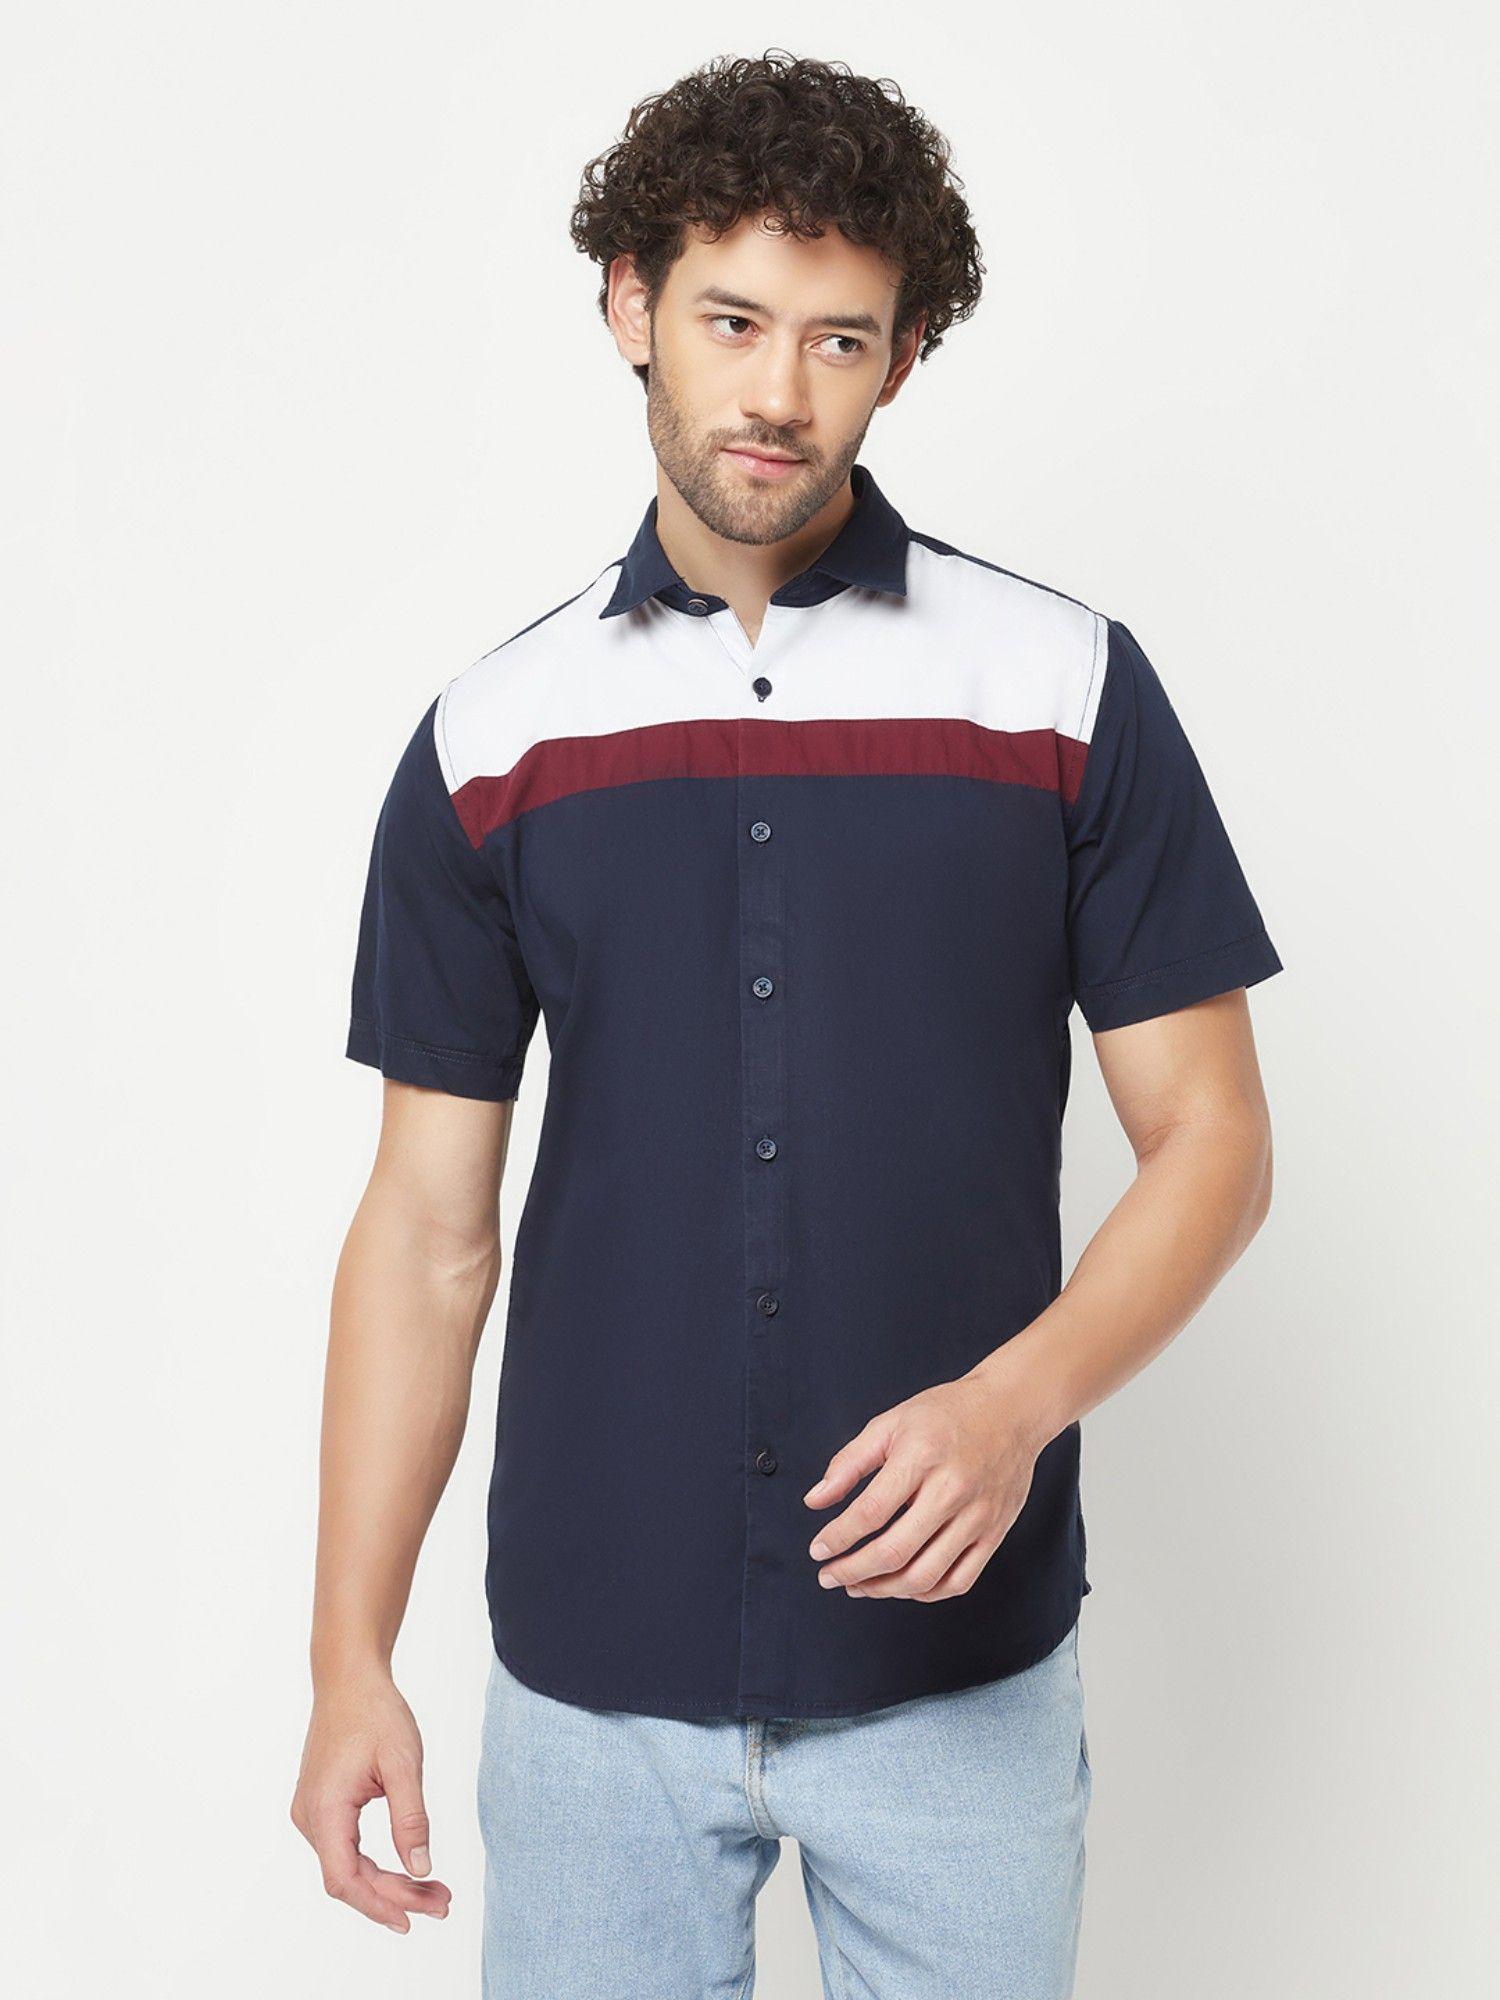 mens navy blue colorblock shirt